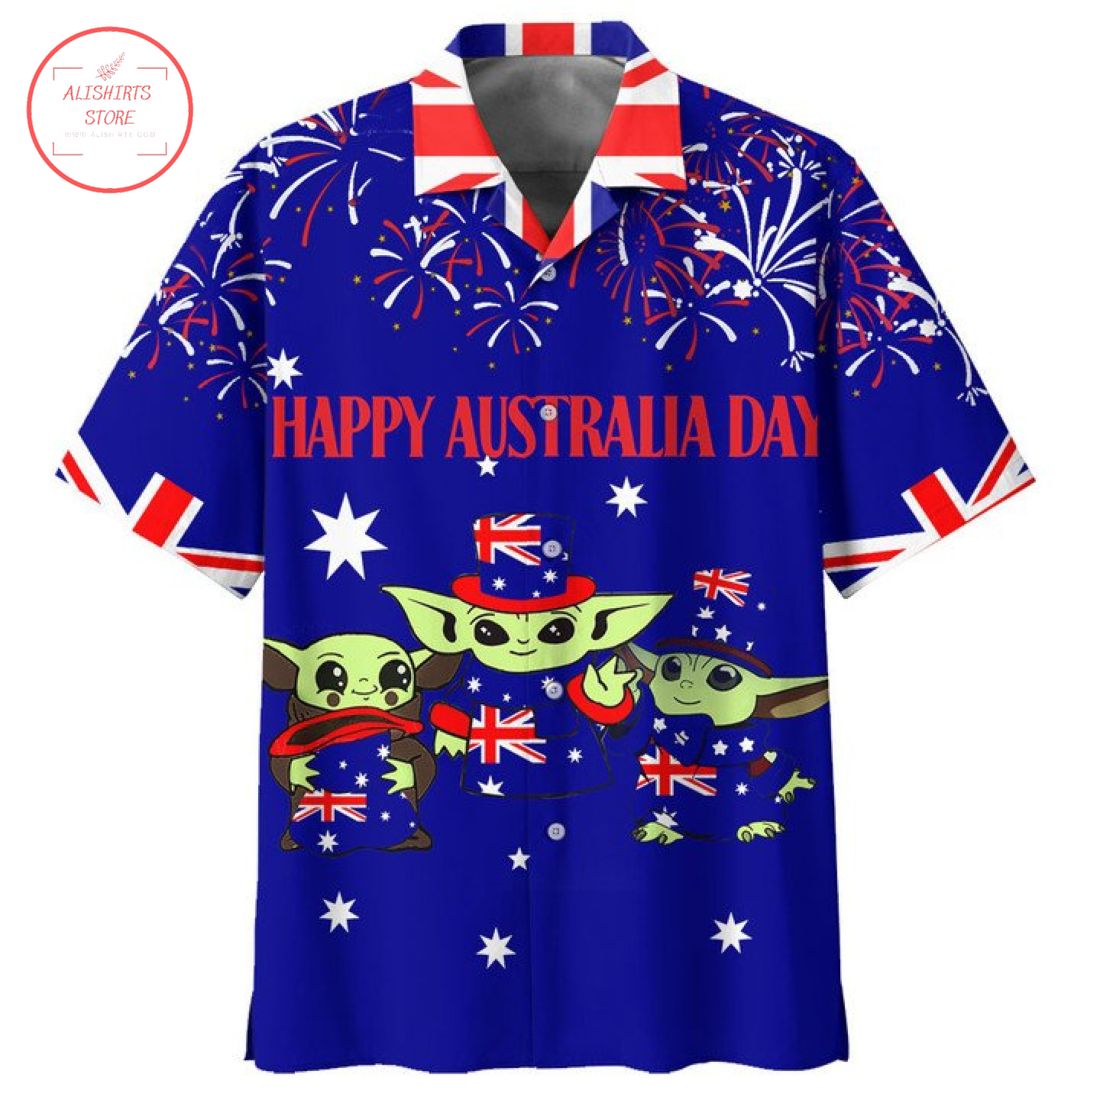 Star Wars Baby Yoda happy Australia day Hawaiian shirt